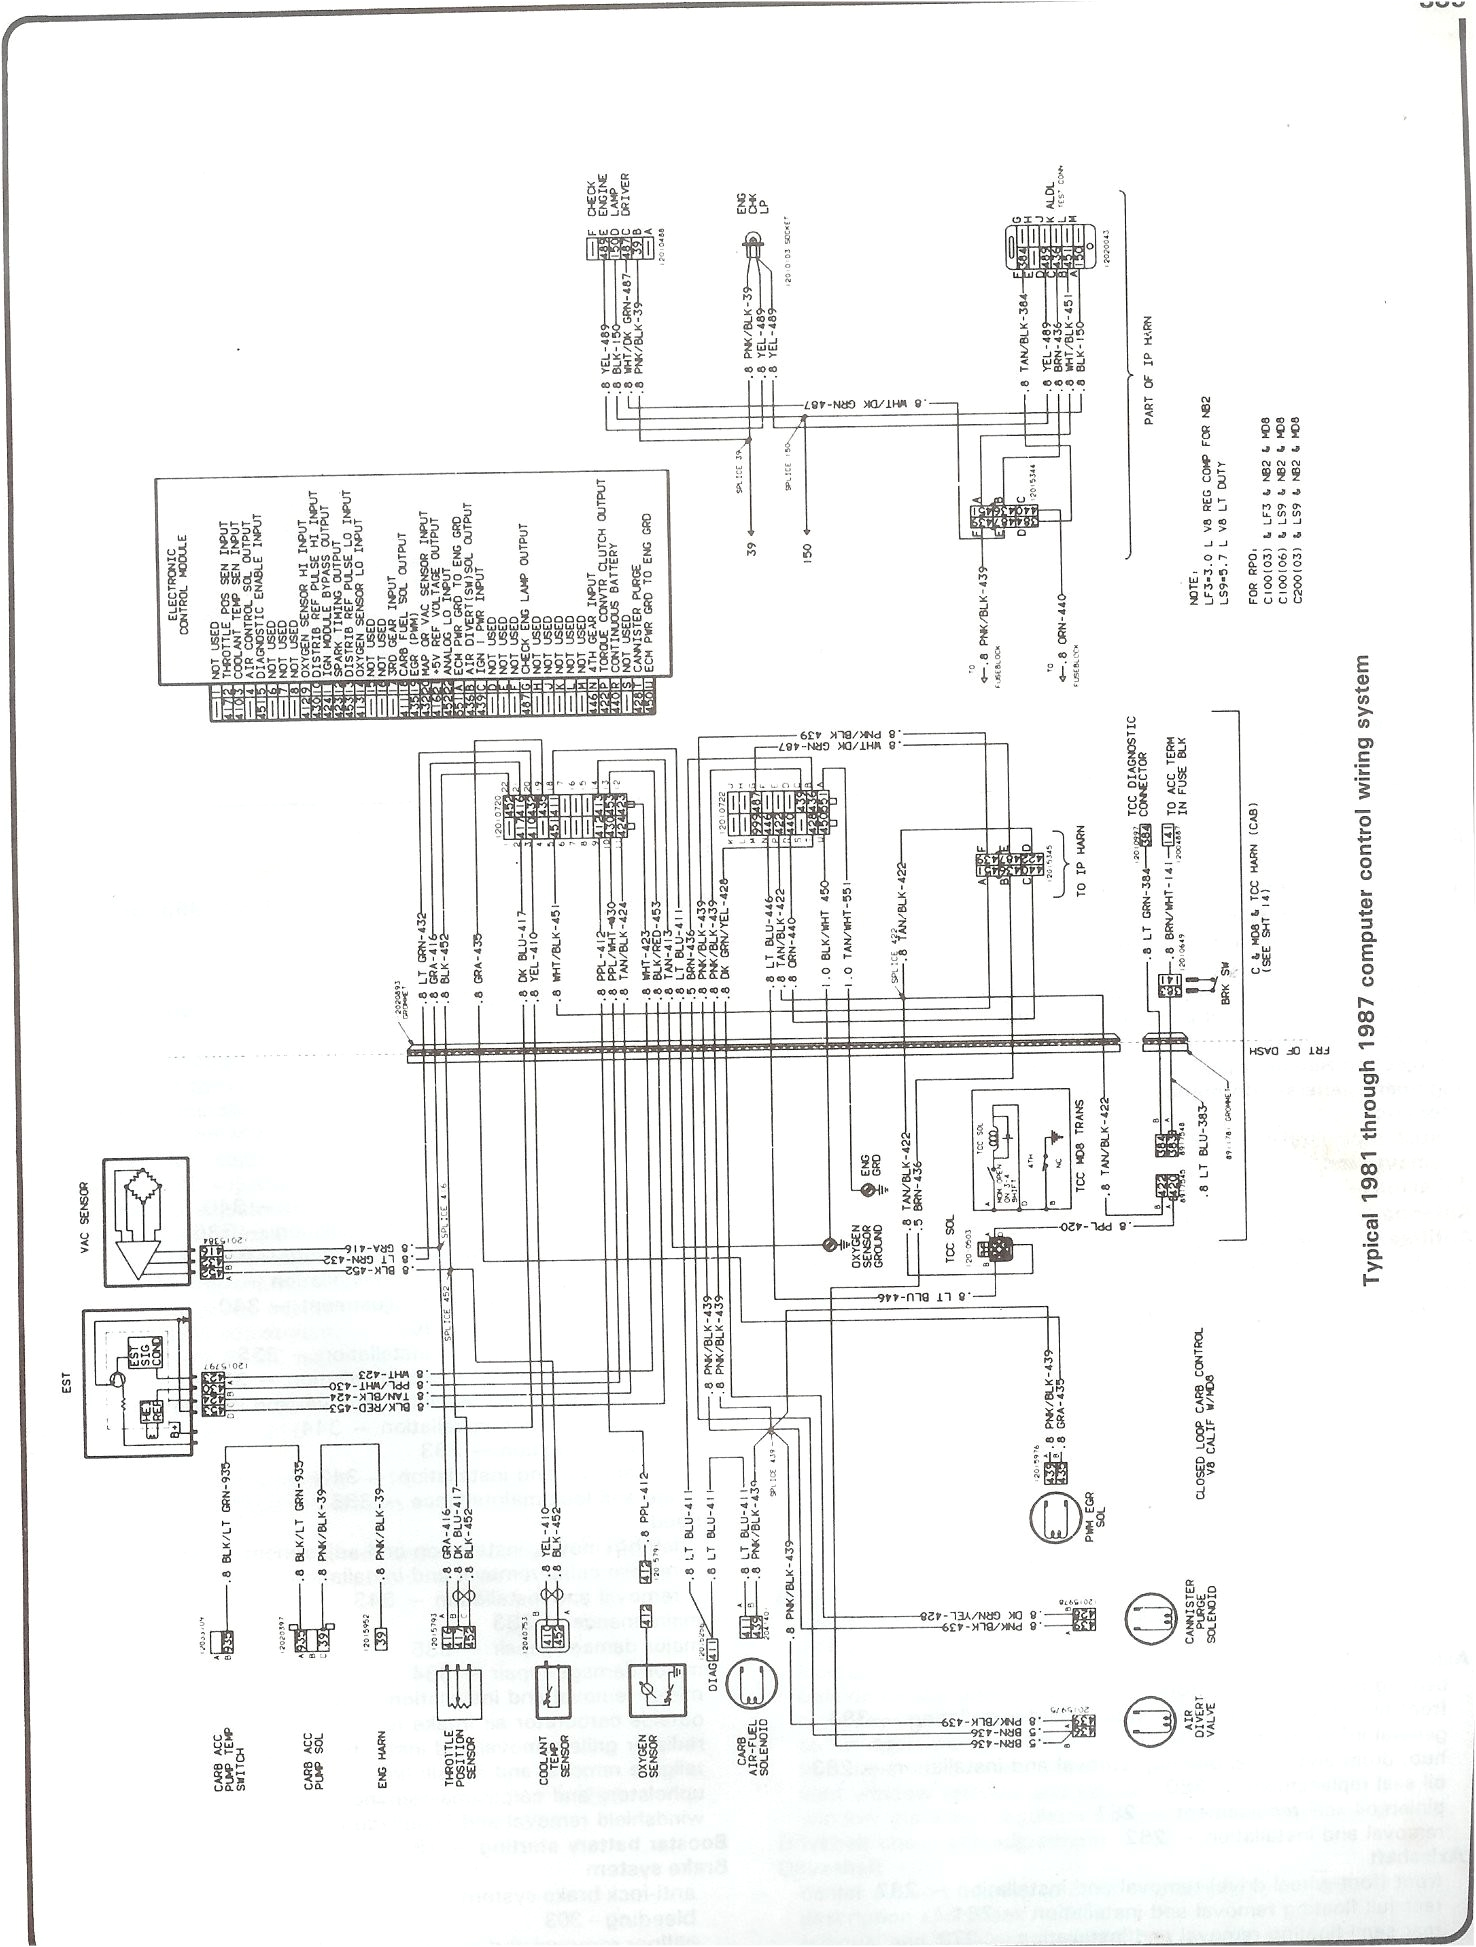 1982 chevy truck door wiring wiring diagram files 1982 chevy truck wiring harness